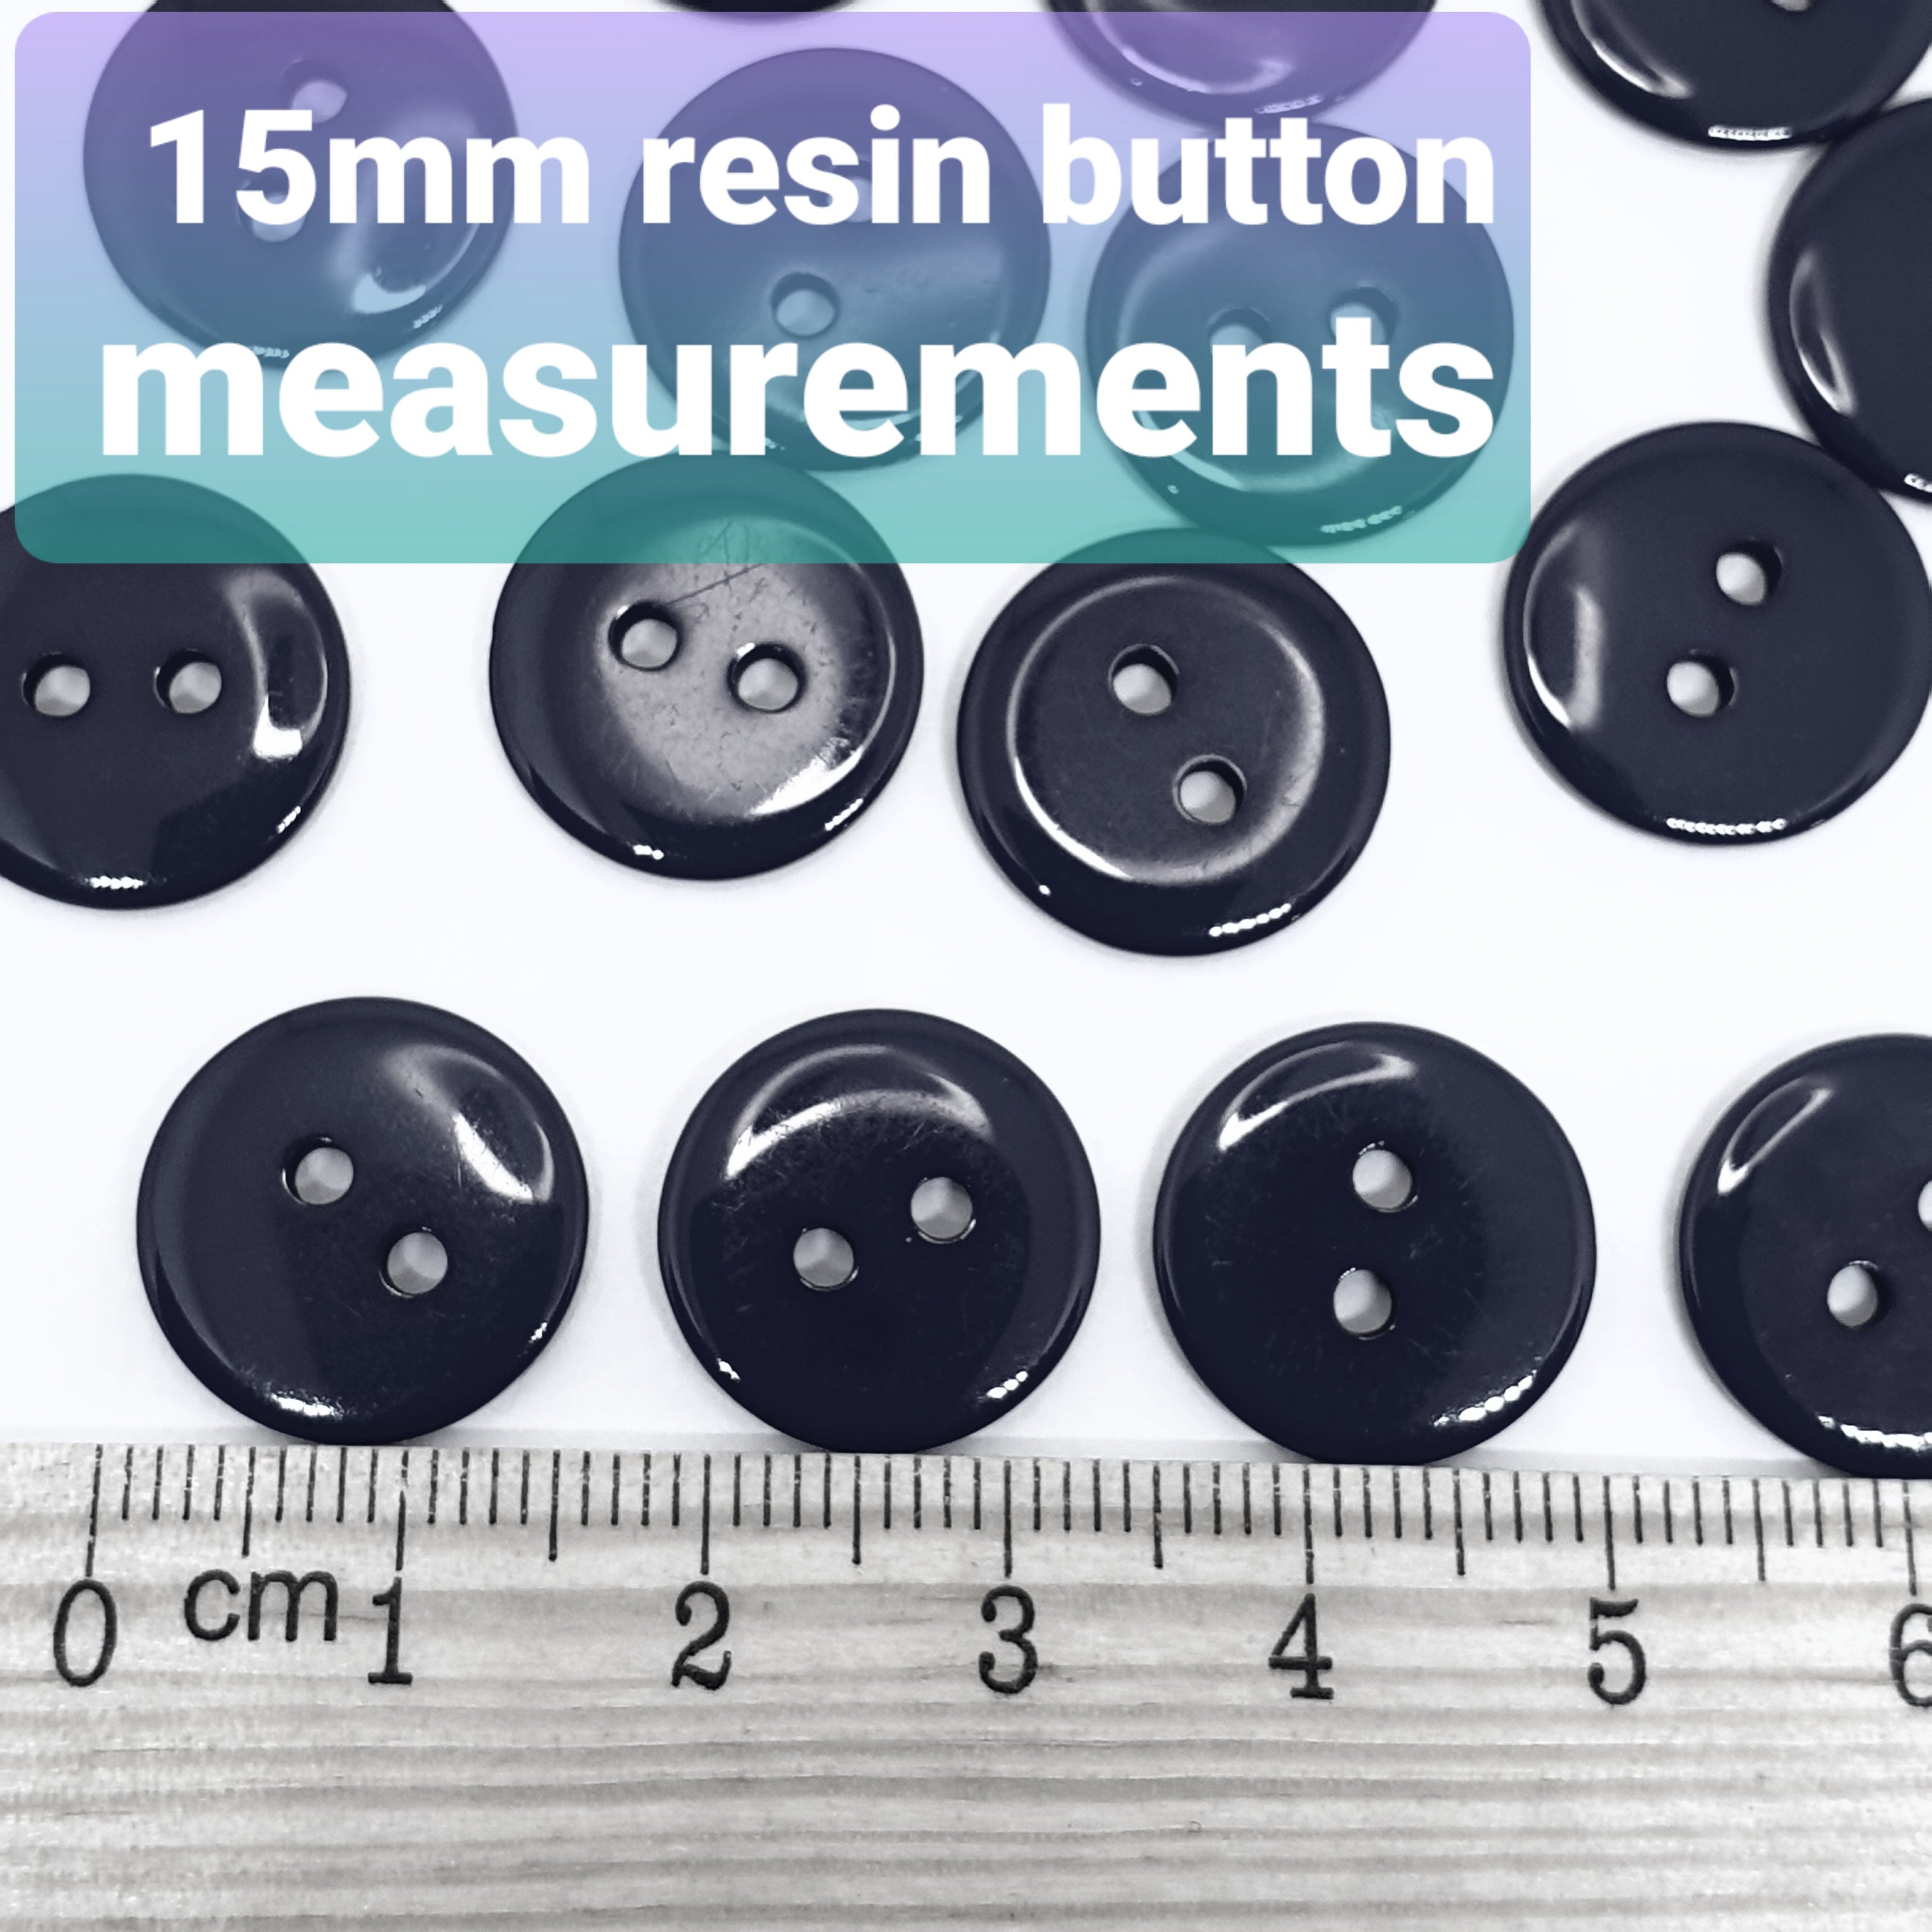 MajorCrafts 72pcs 15mm Orange 2 Holes Round Resin Sewing Buttons